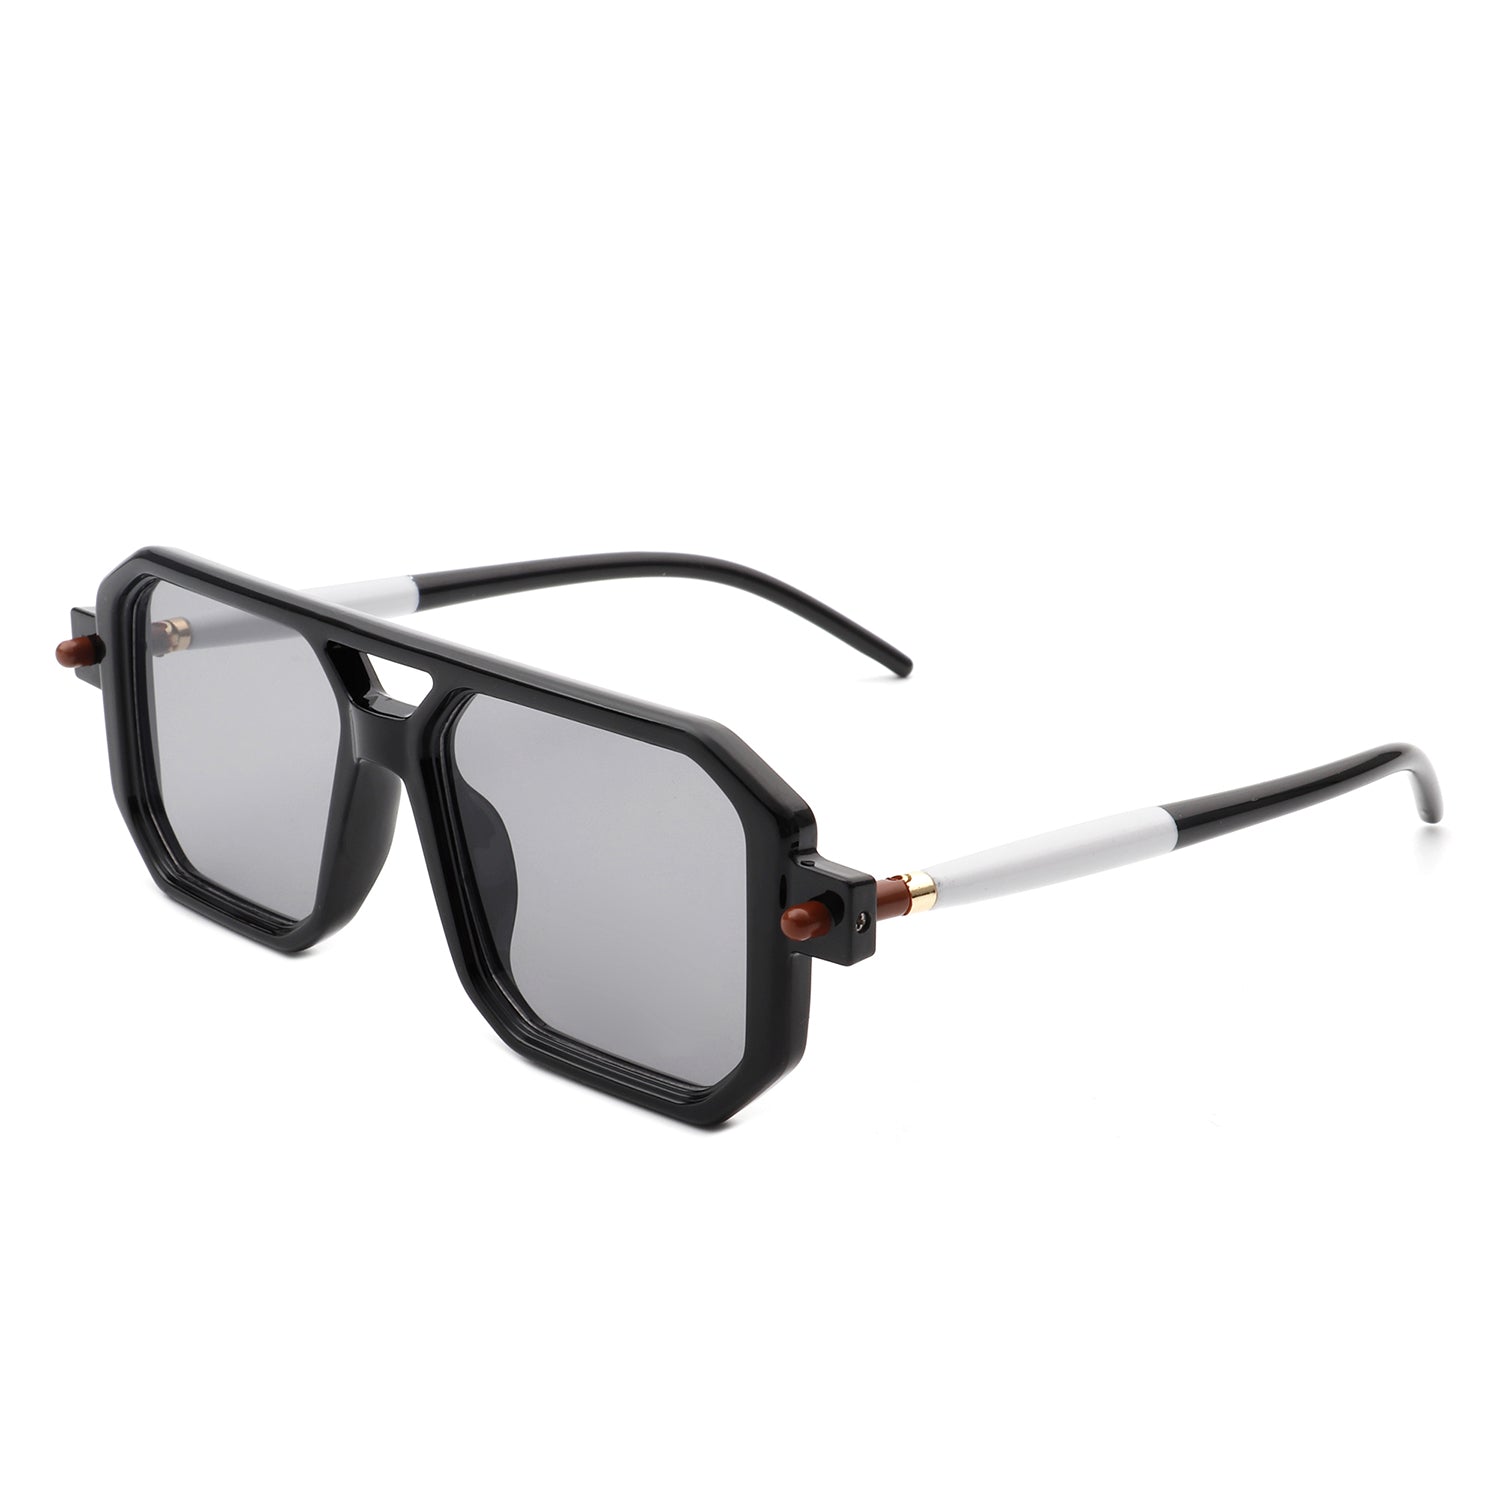 Bluebird - Retro Square Flat Top Brow-Bar Fashion Sunglasses-2